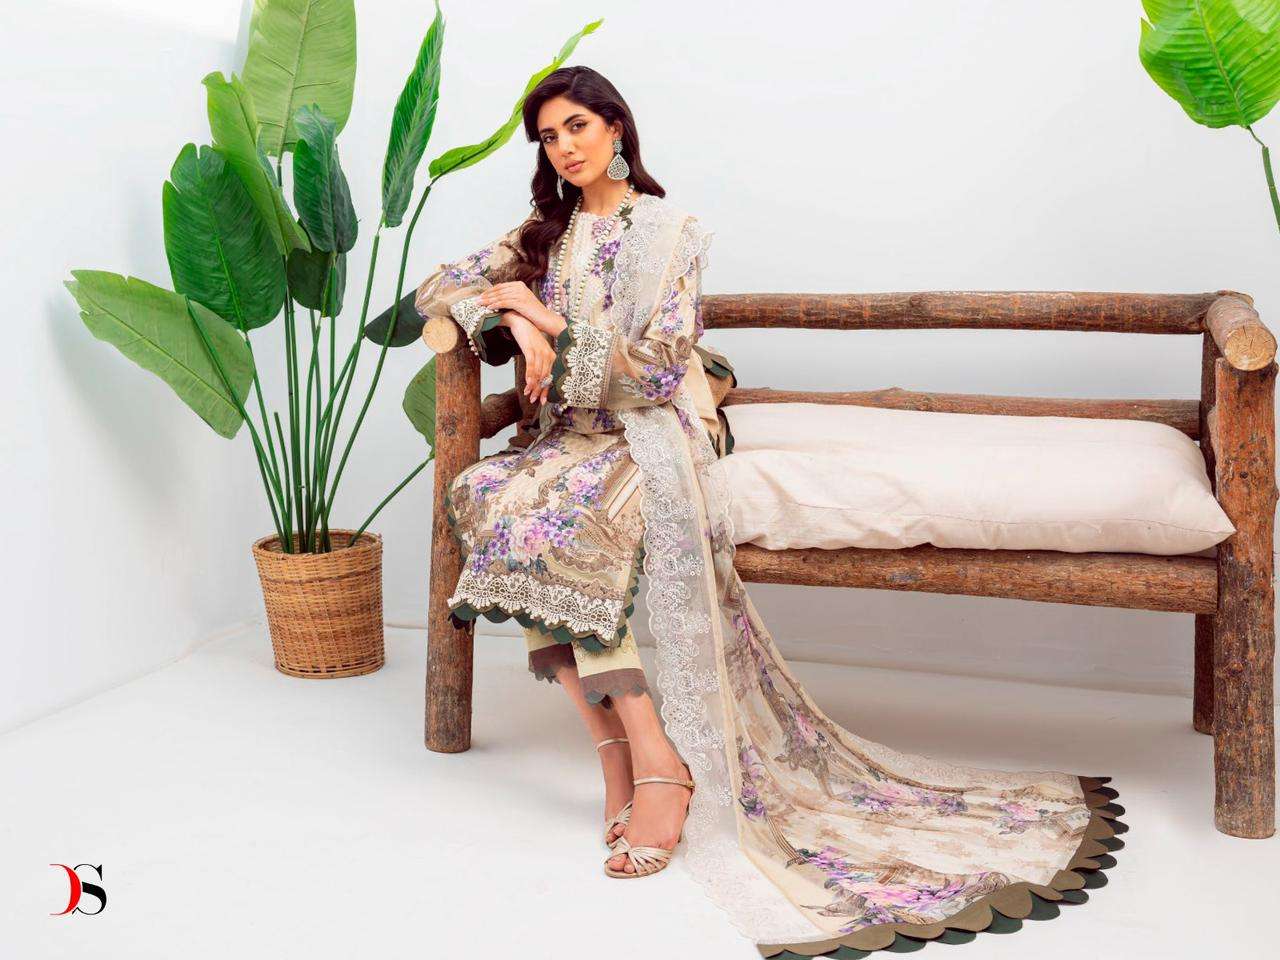 deepsy suits jade needle wonder vol-2 3181-3188 series trendy designer pakistani salwar suits wholesale price surat 